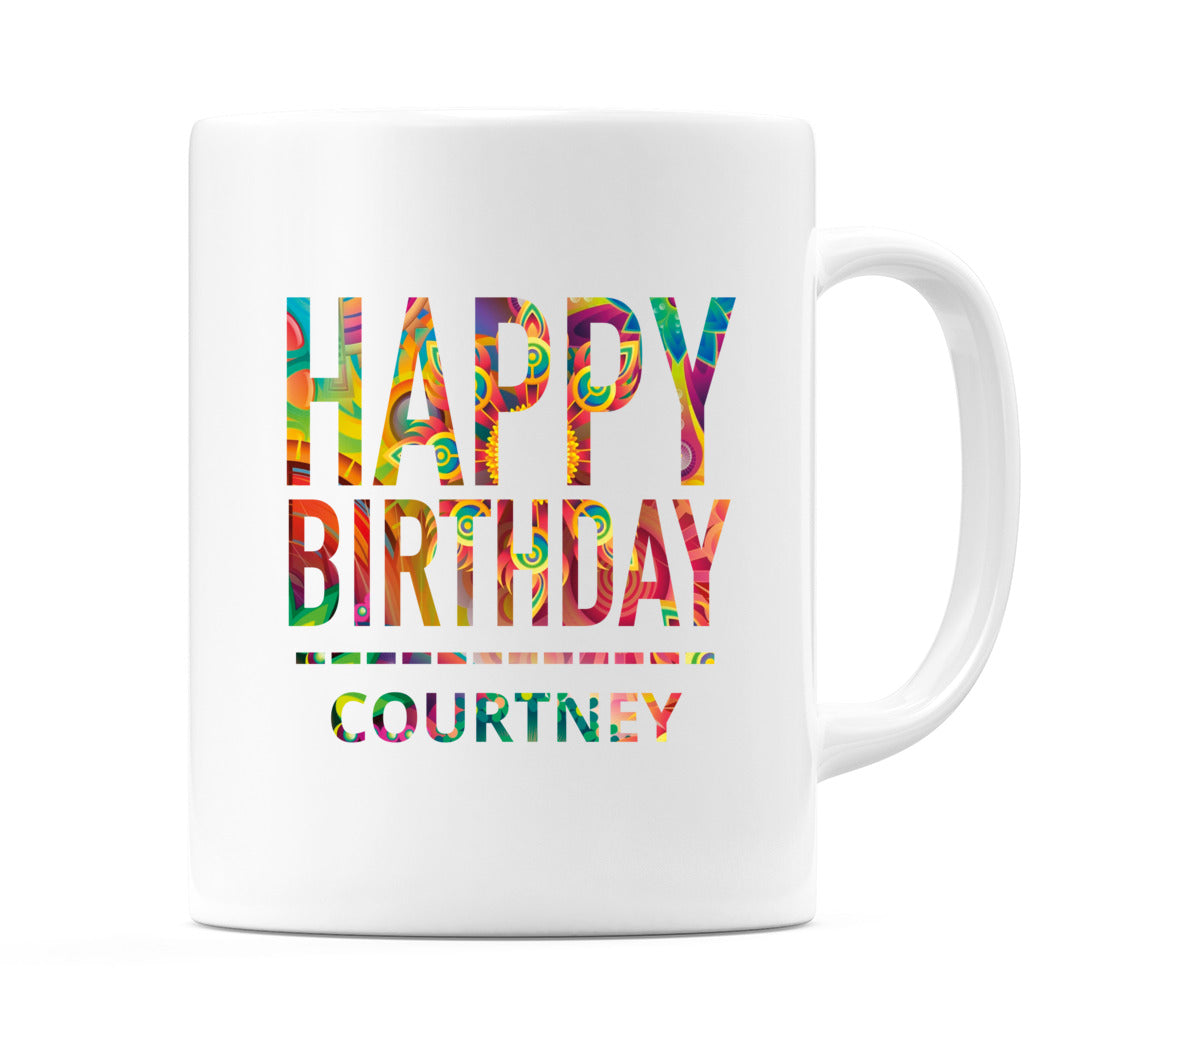 Happy Birthday Courtney (Tie Dye Effect) Mug Cup by WeDoMugs